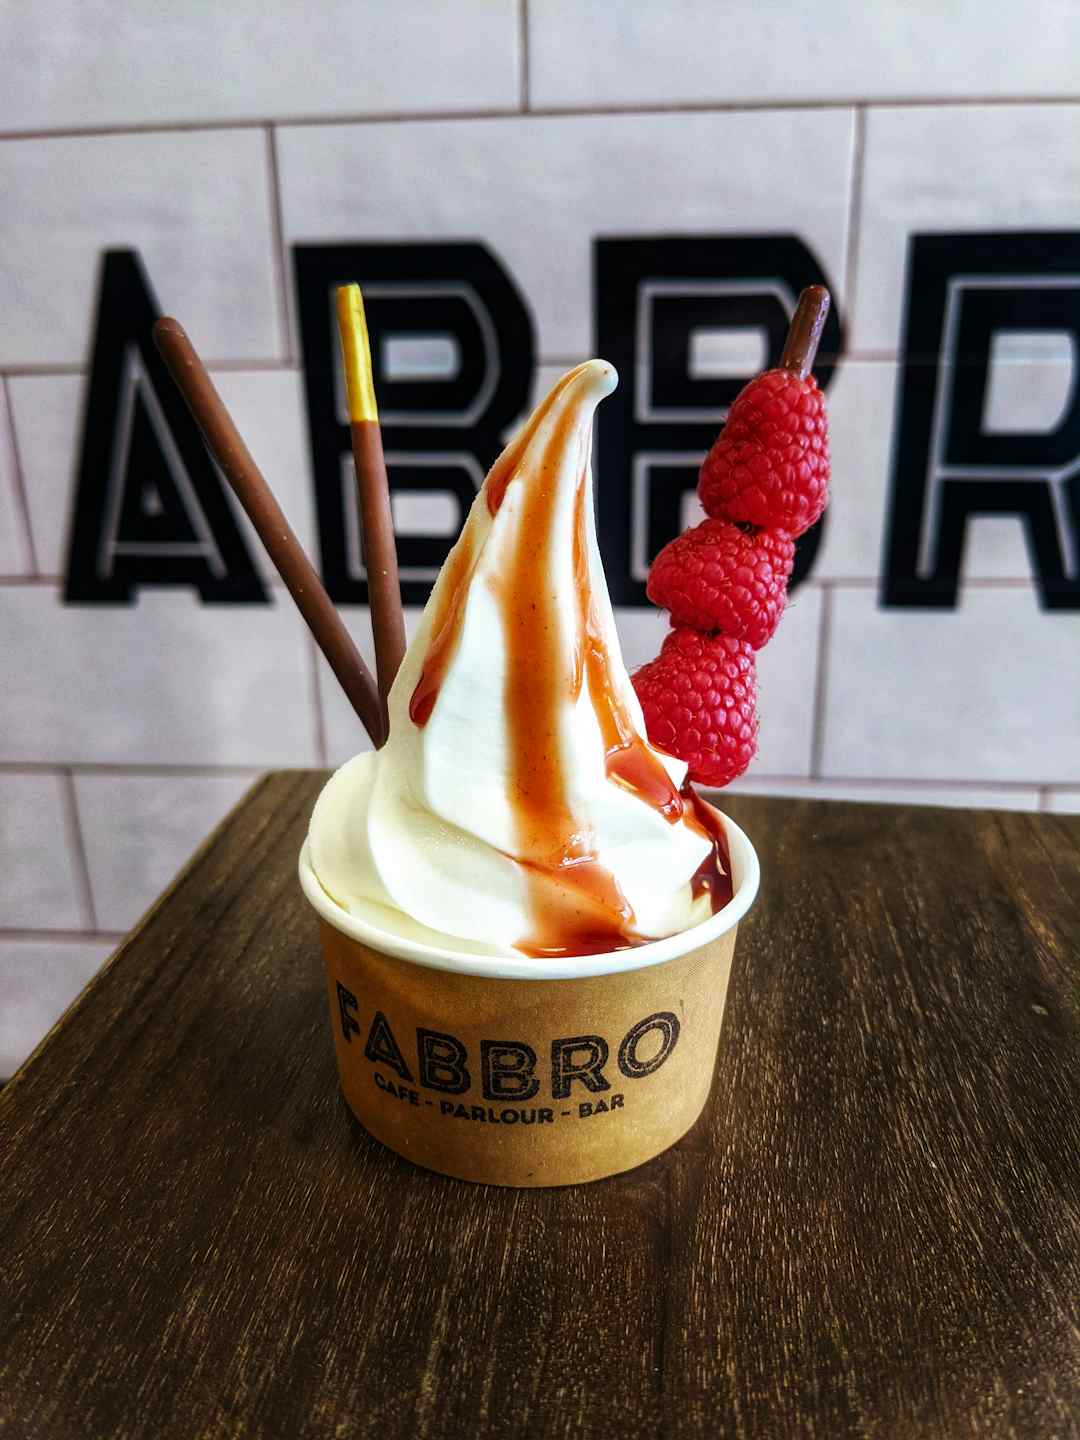 Hero image for supplier FABBRO - Ice Cream, DJ & Sound System